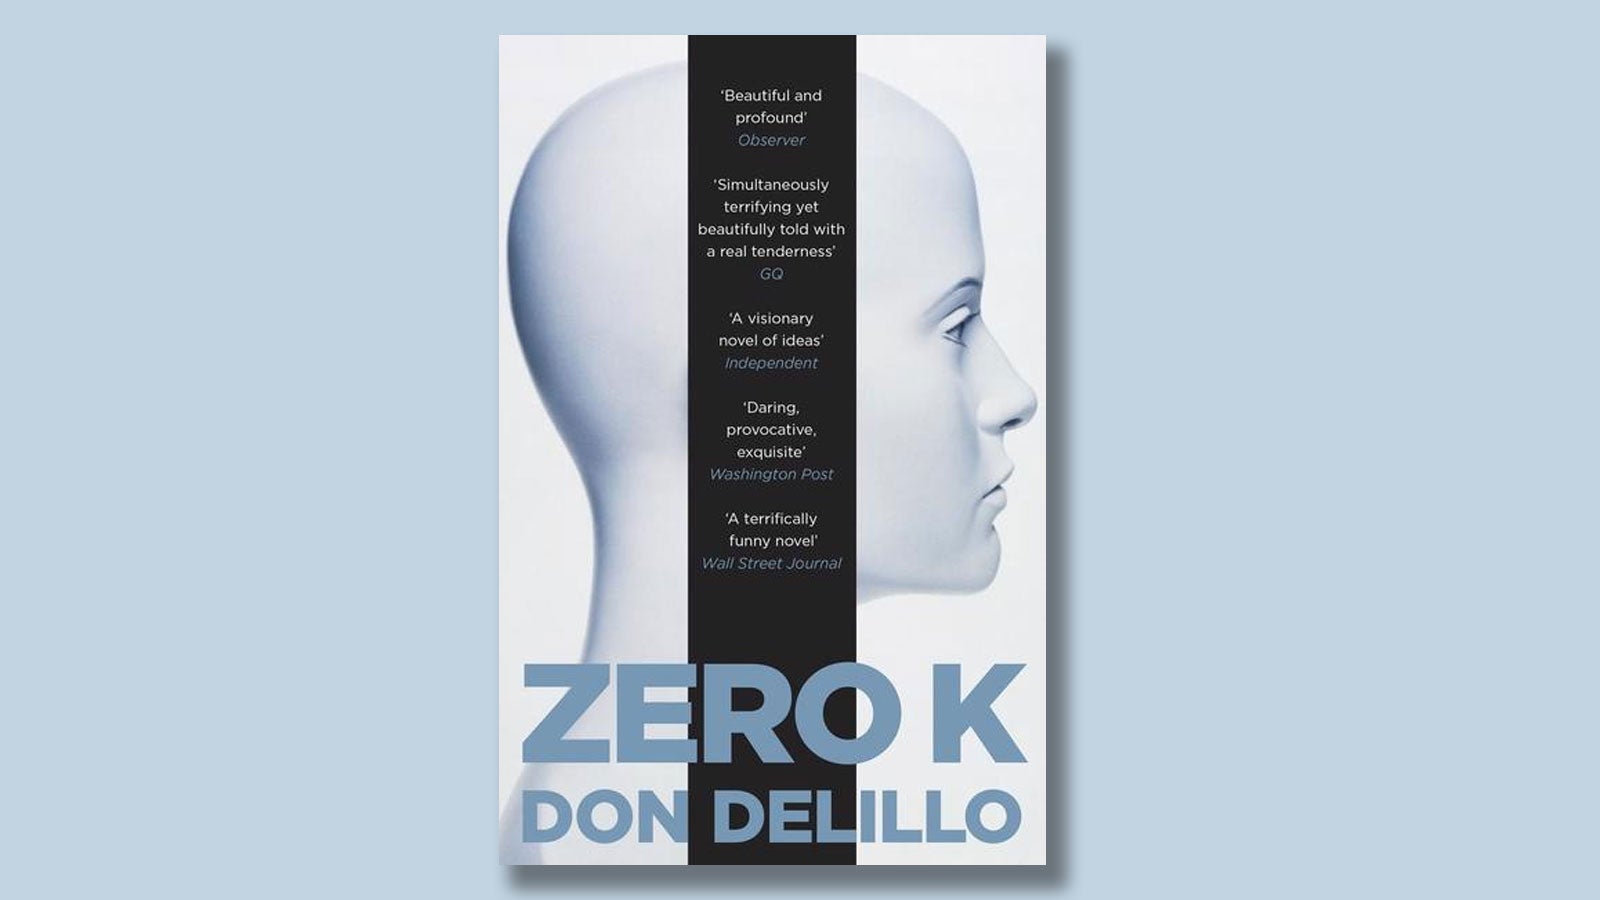 Zero K Paperback book jacket on a pale blue background.